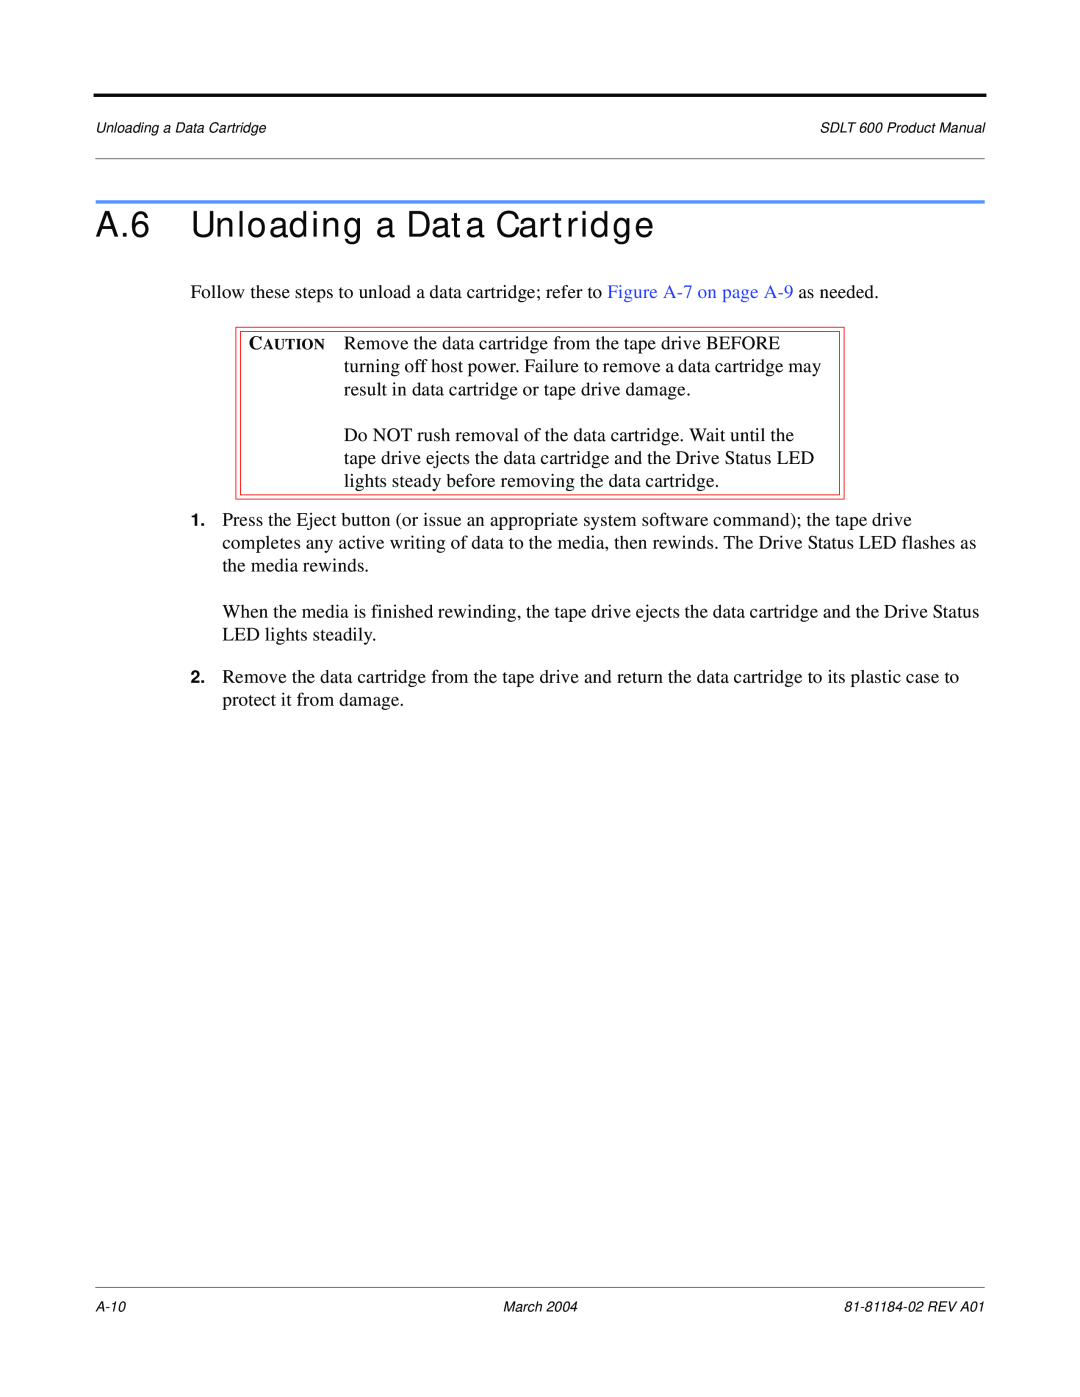 Tandberg Data 600 manual A.6 Unloading a Data Cartridge 